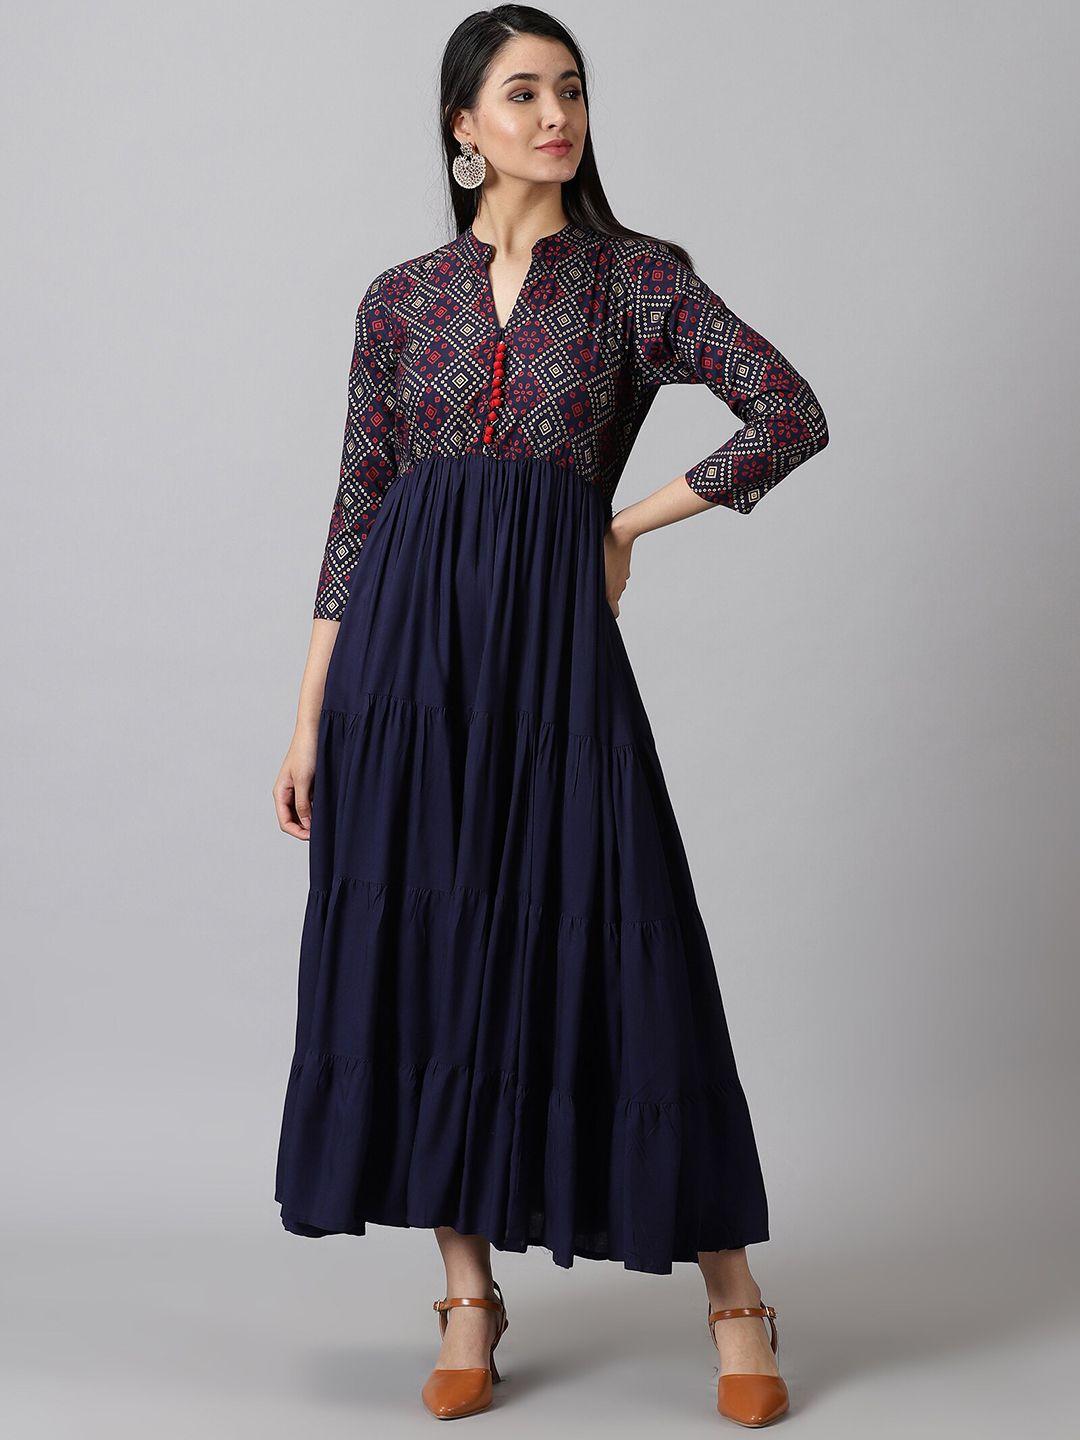 purshottam wala geometric printed mandarin collar a-line ethnic dress